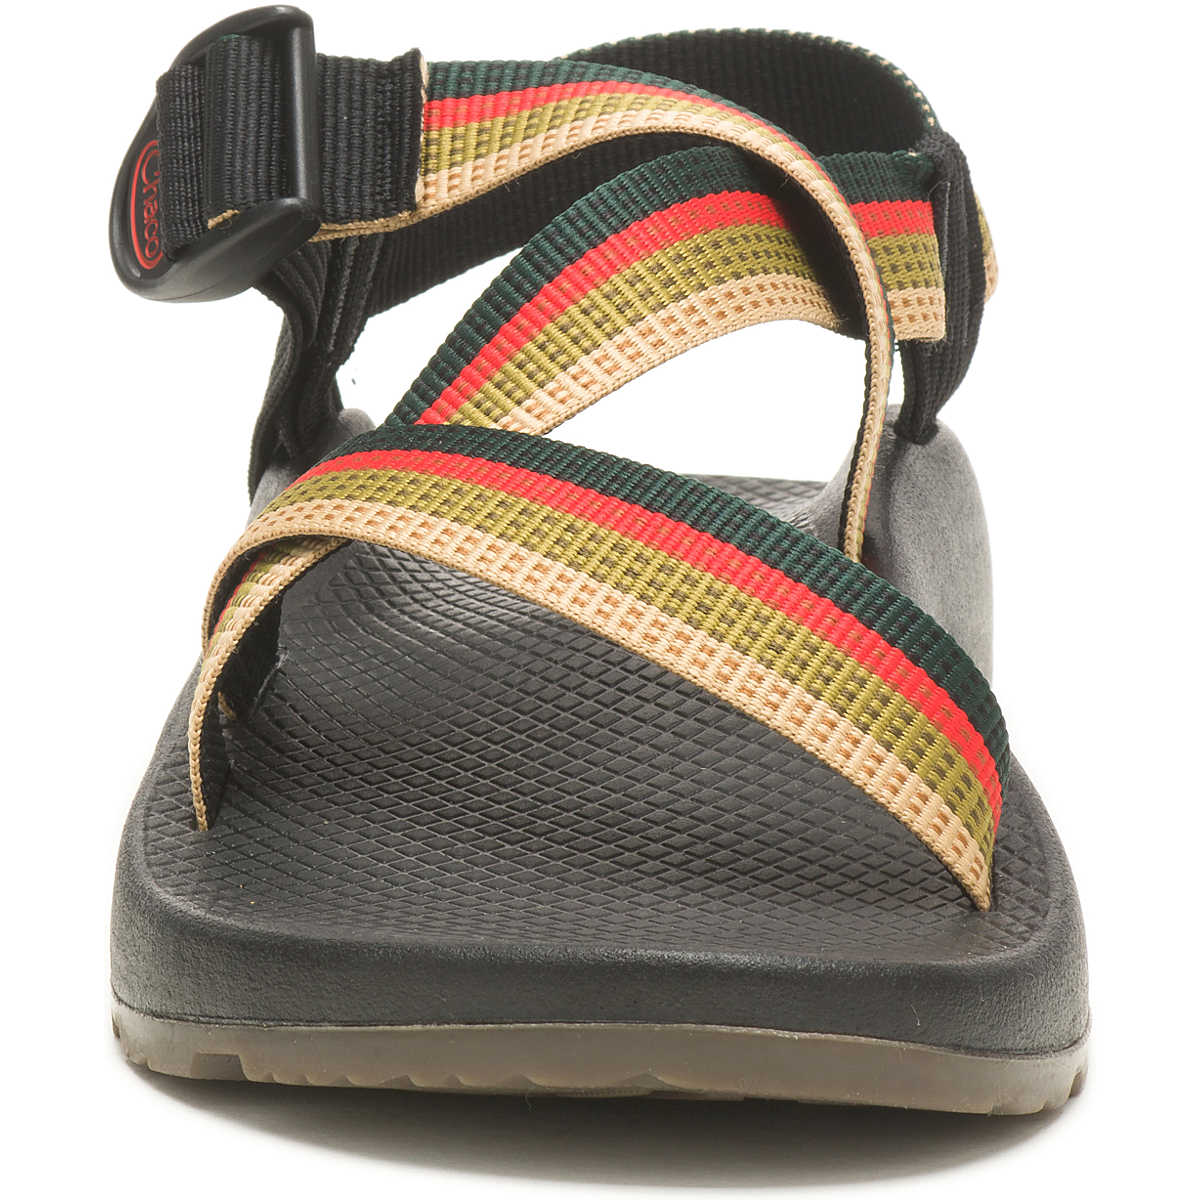 Chaco Men's Z/1 Classic Sandals - Tetra Moss